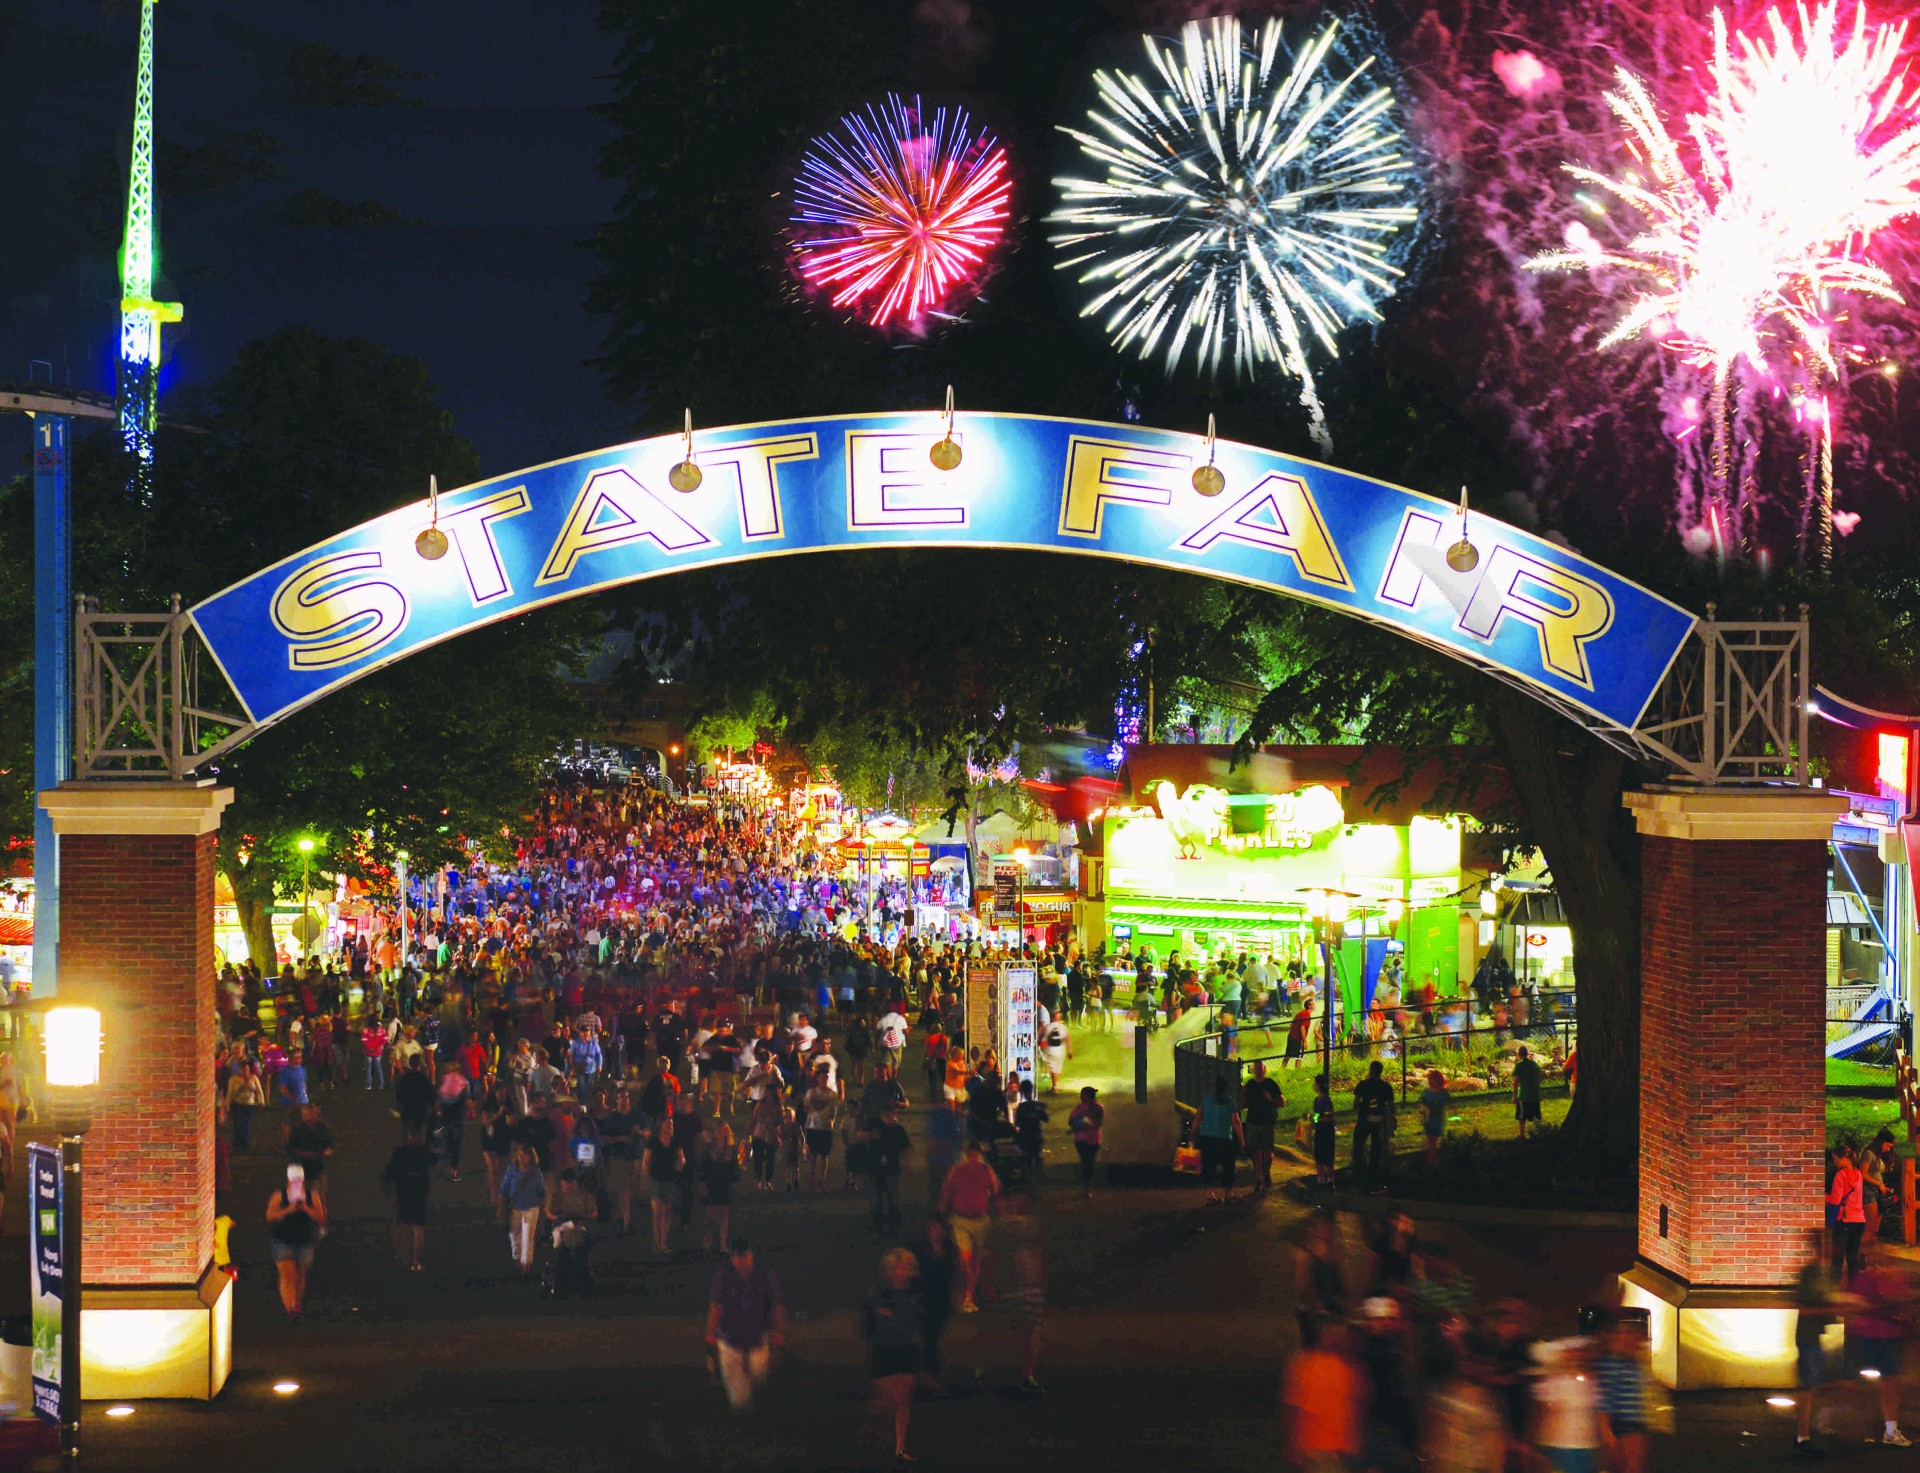 Popular Festivals & Fairs to Check Out This Season Meet Minneapolis